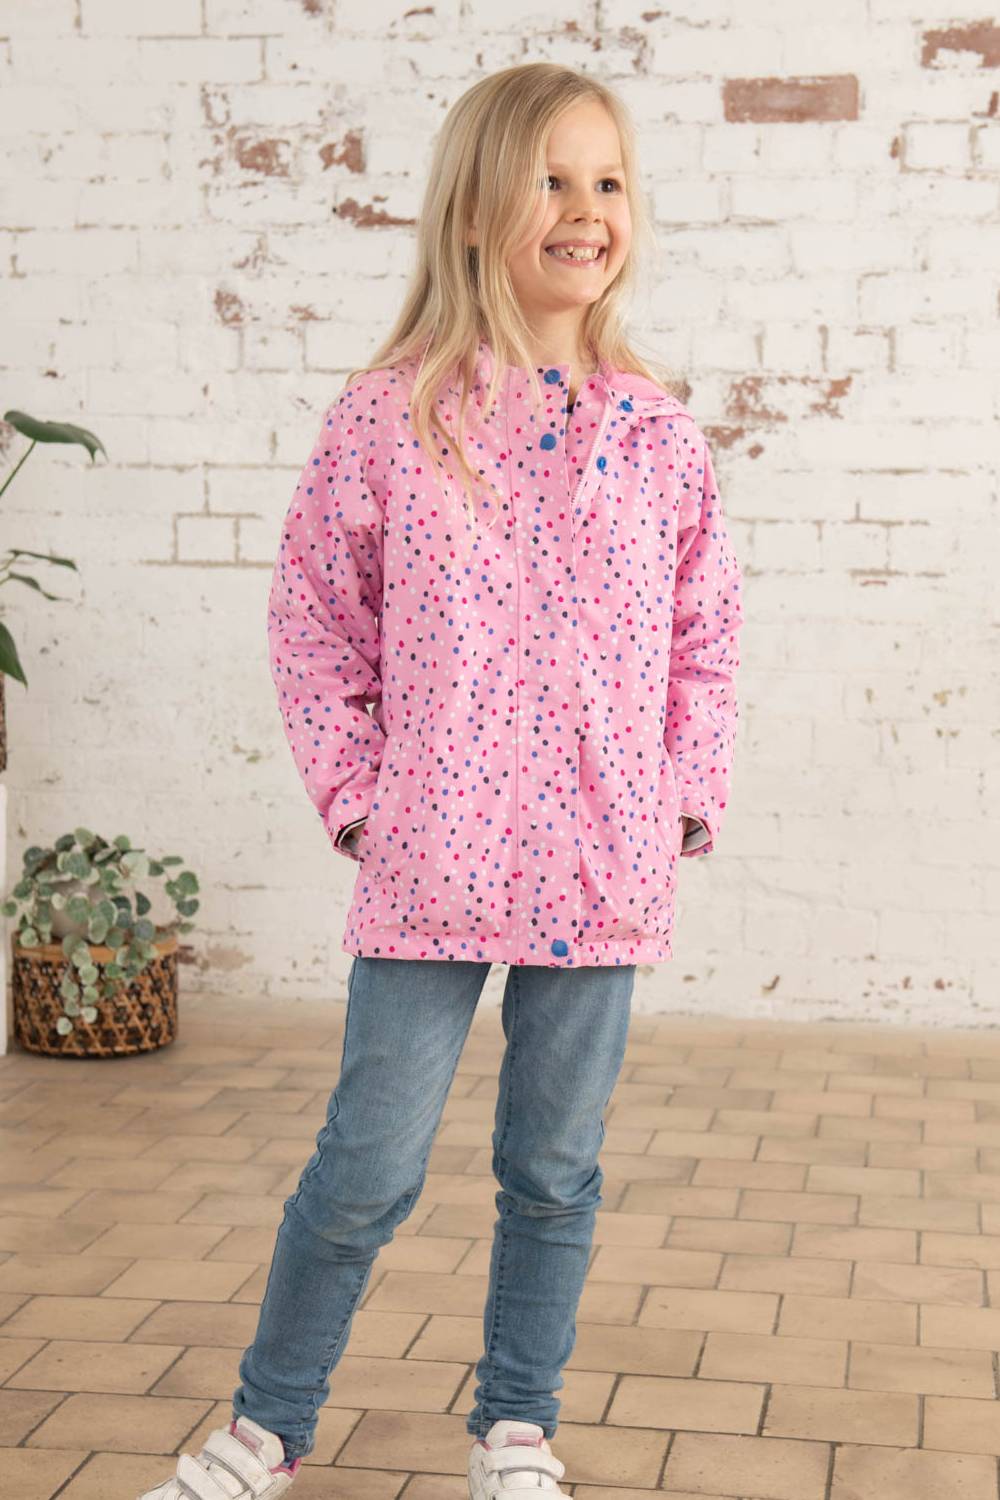 Lighthouse Girls Olivia Waterproof Jacket in Butterfly Print 